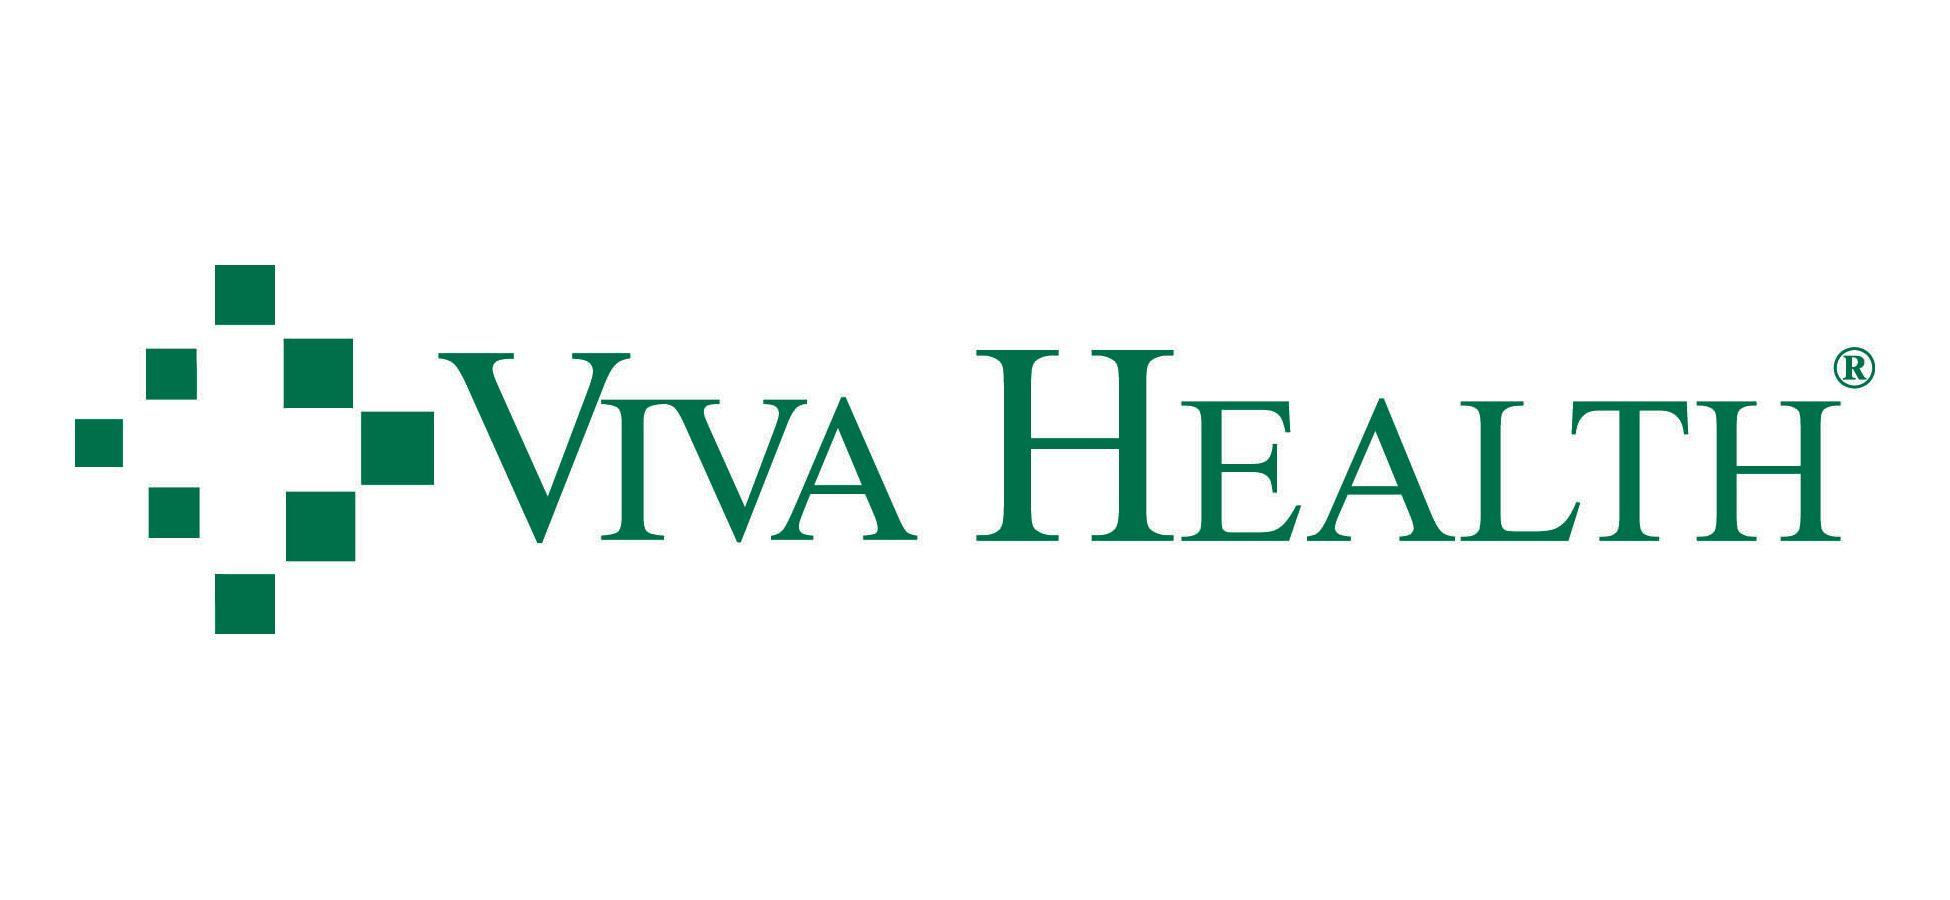 4 Square Logo - 4 Square Logo With VIVA HEALTH, Color State Nurses